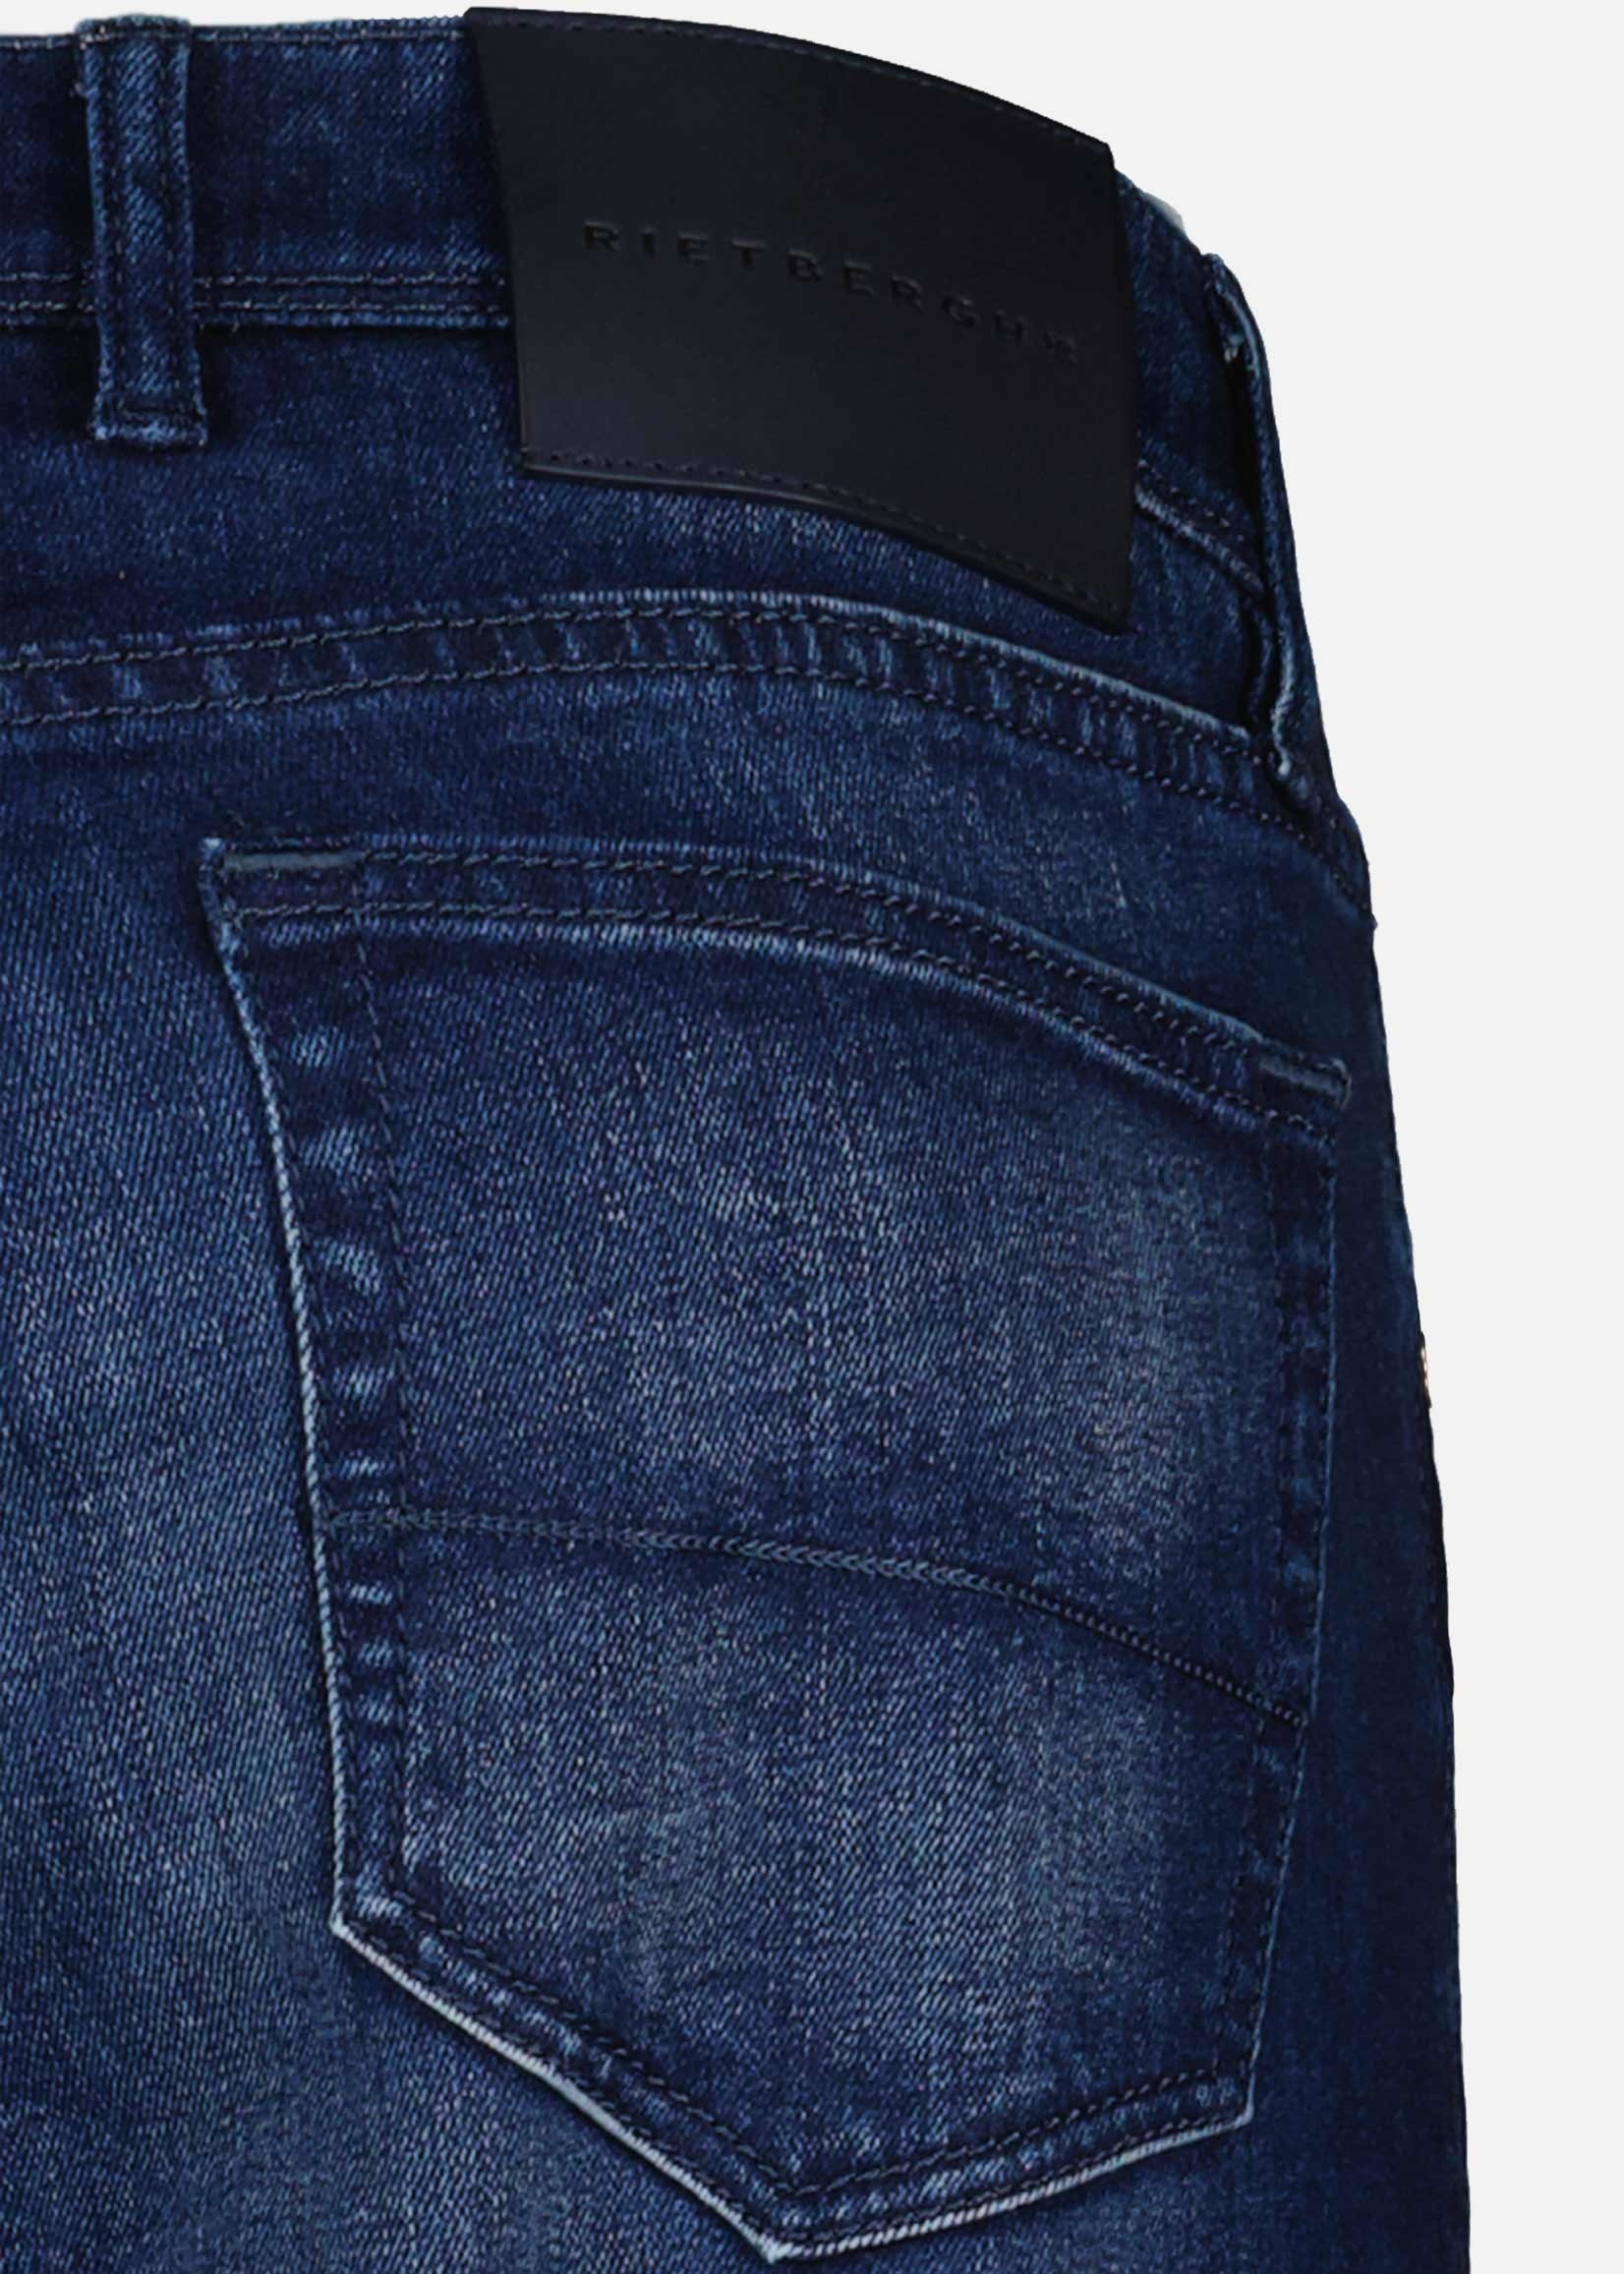 Rietbergh Jeans |  Dark Blue